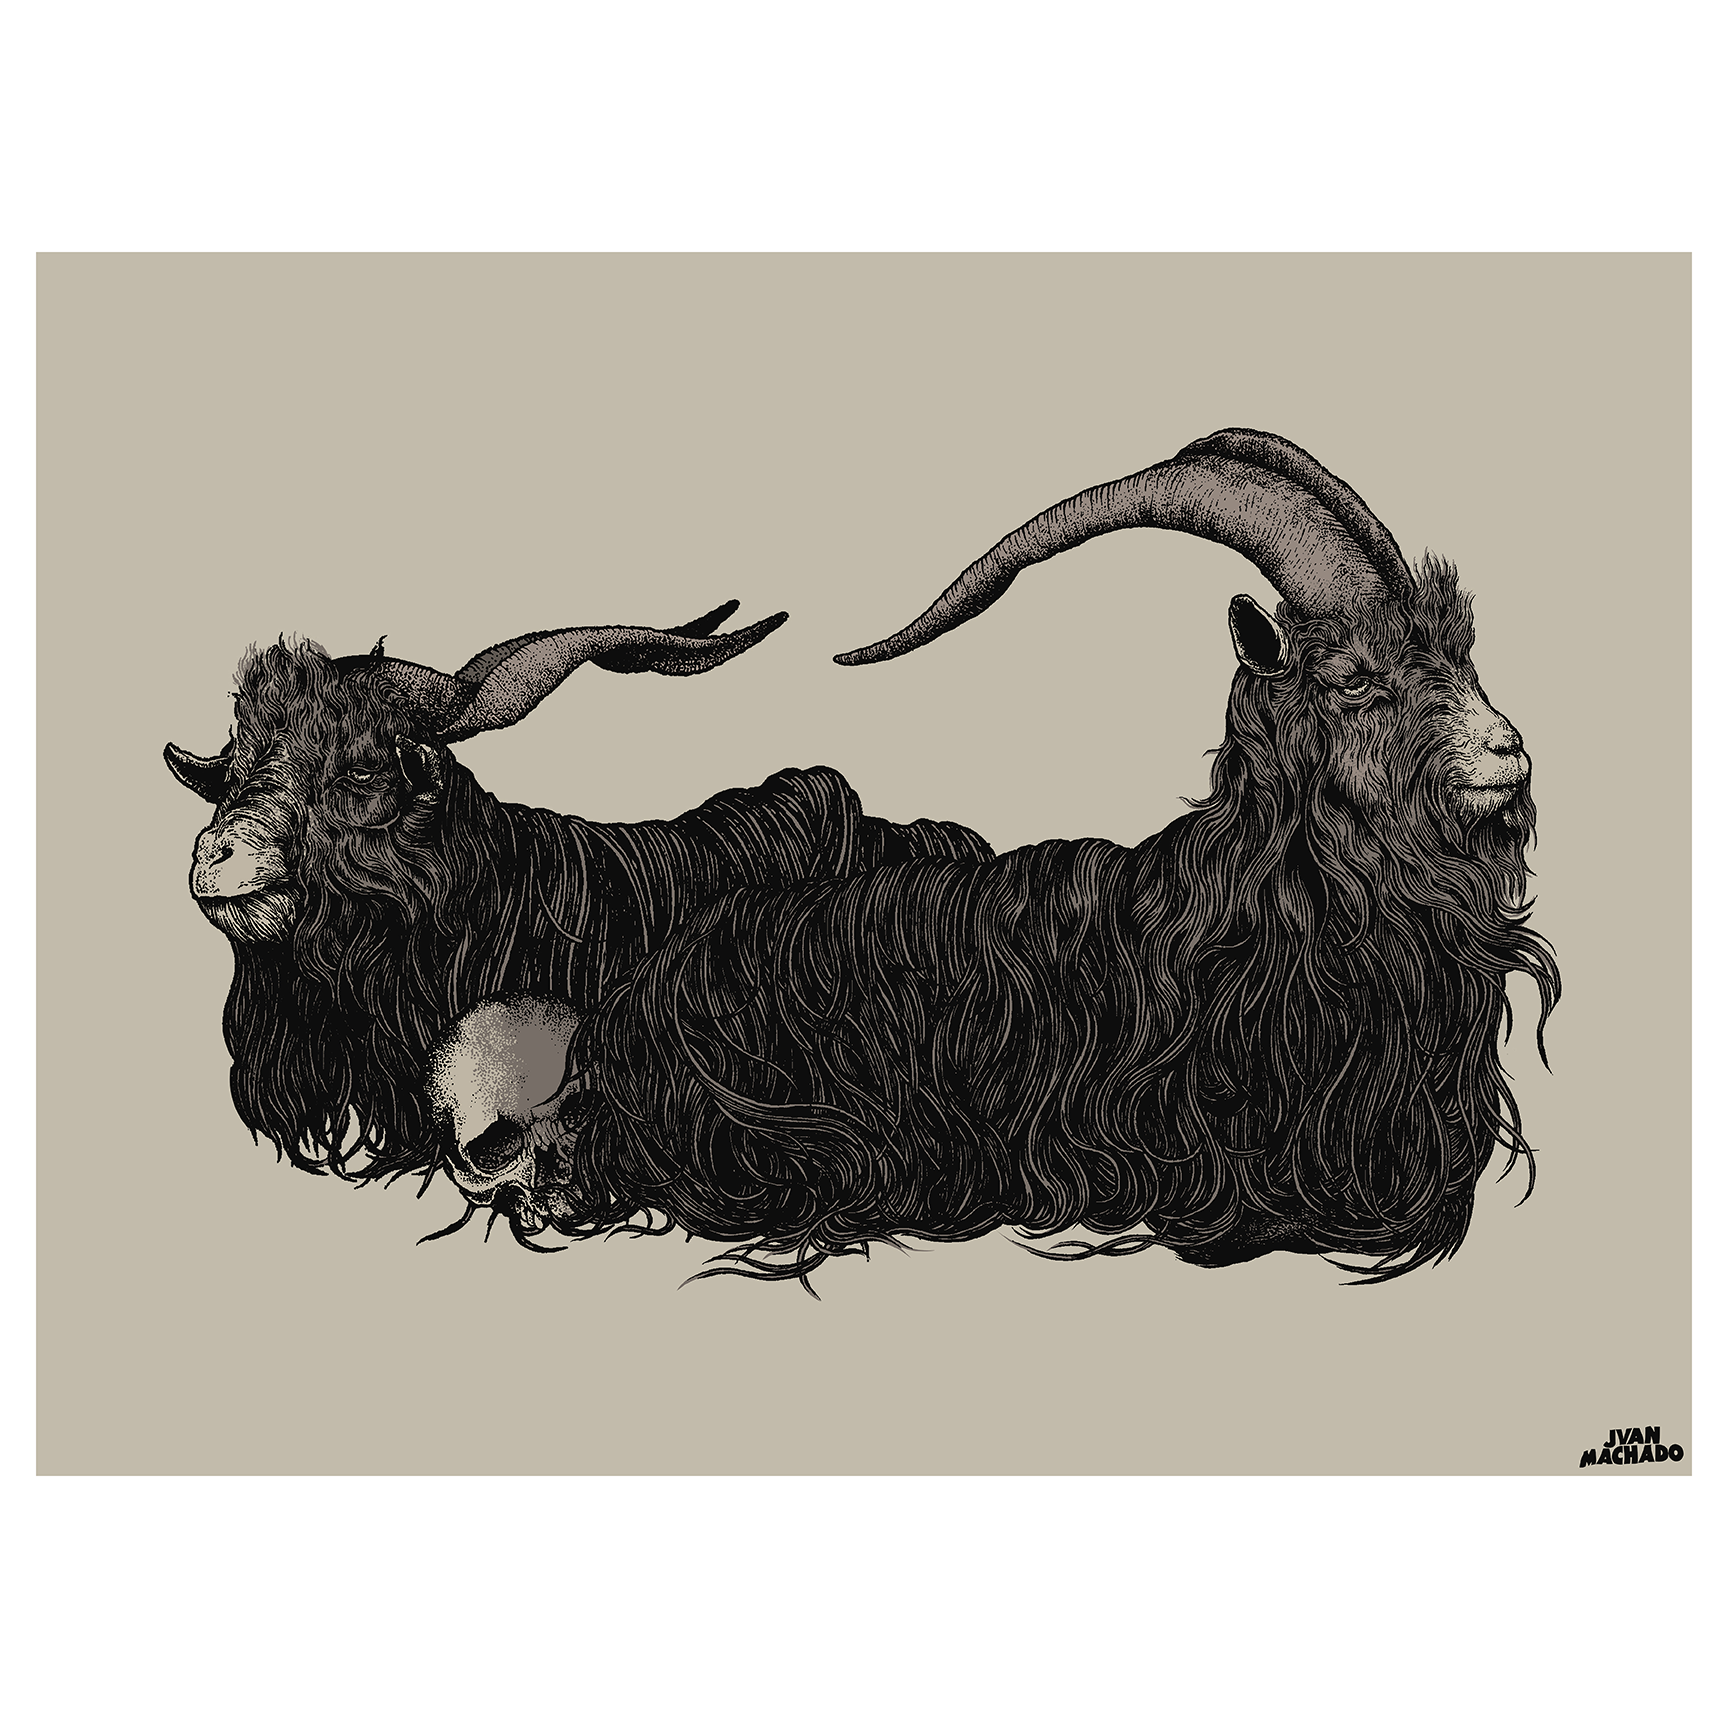 Juan Machado "Two Goats" Giclee Print